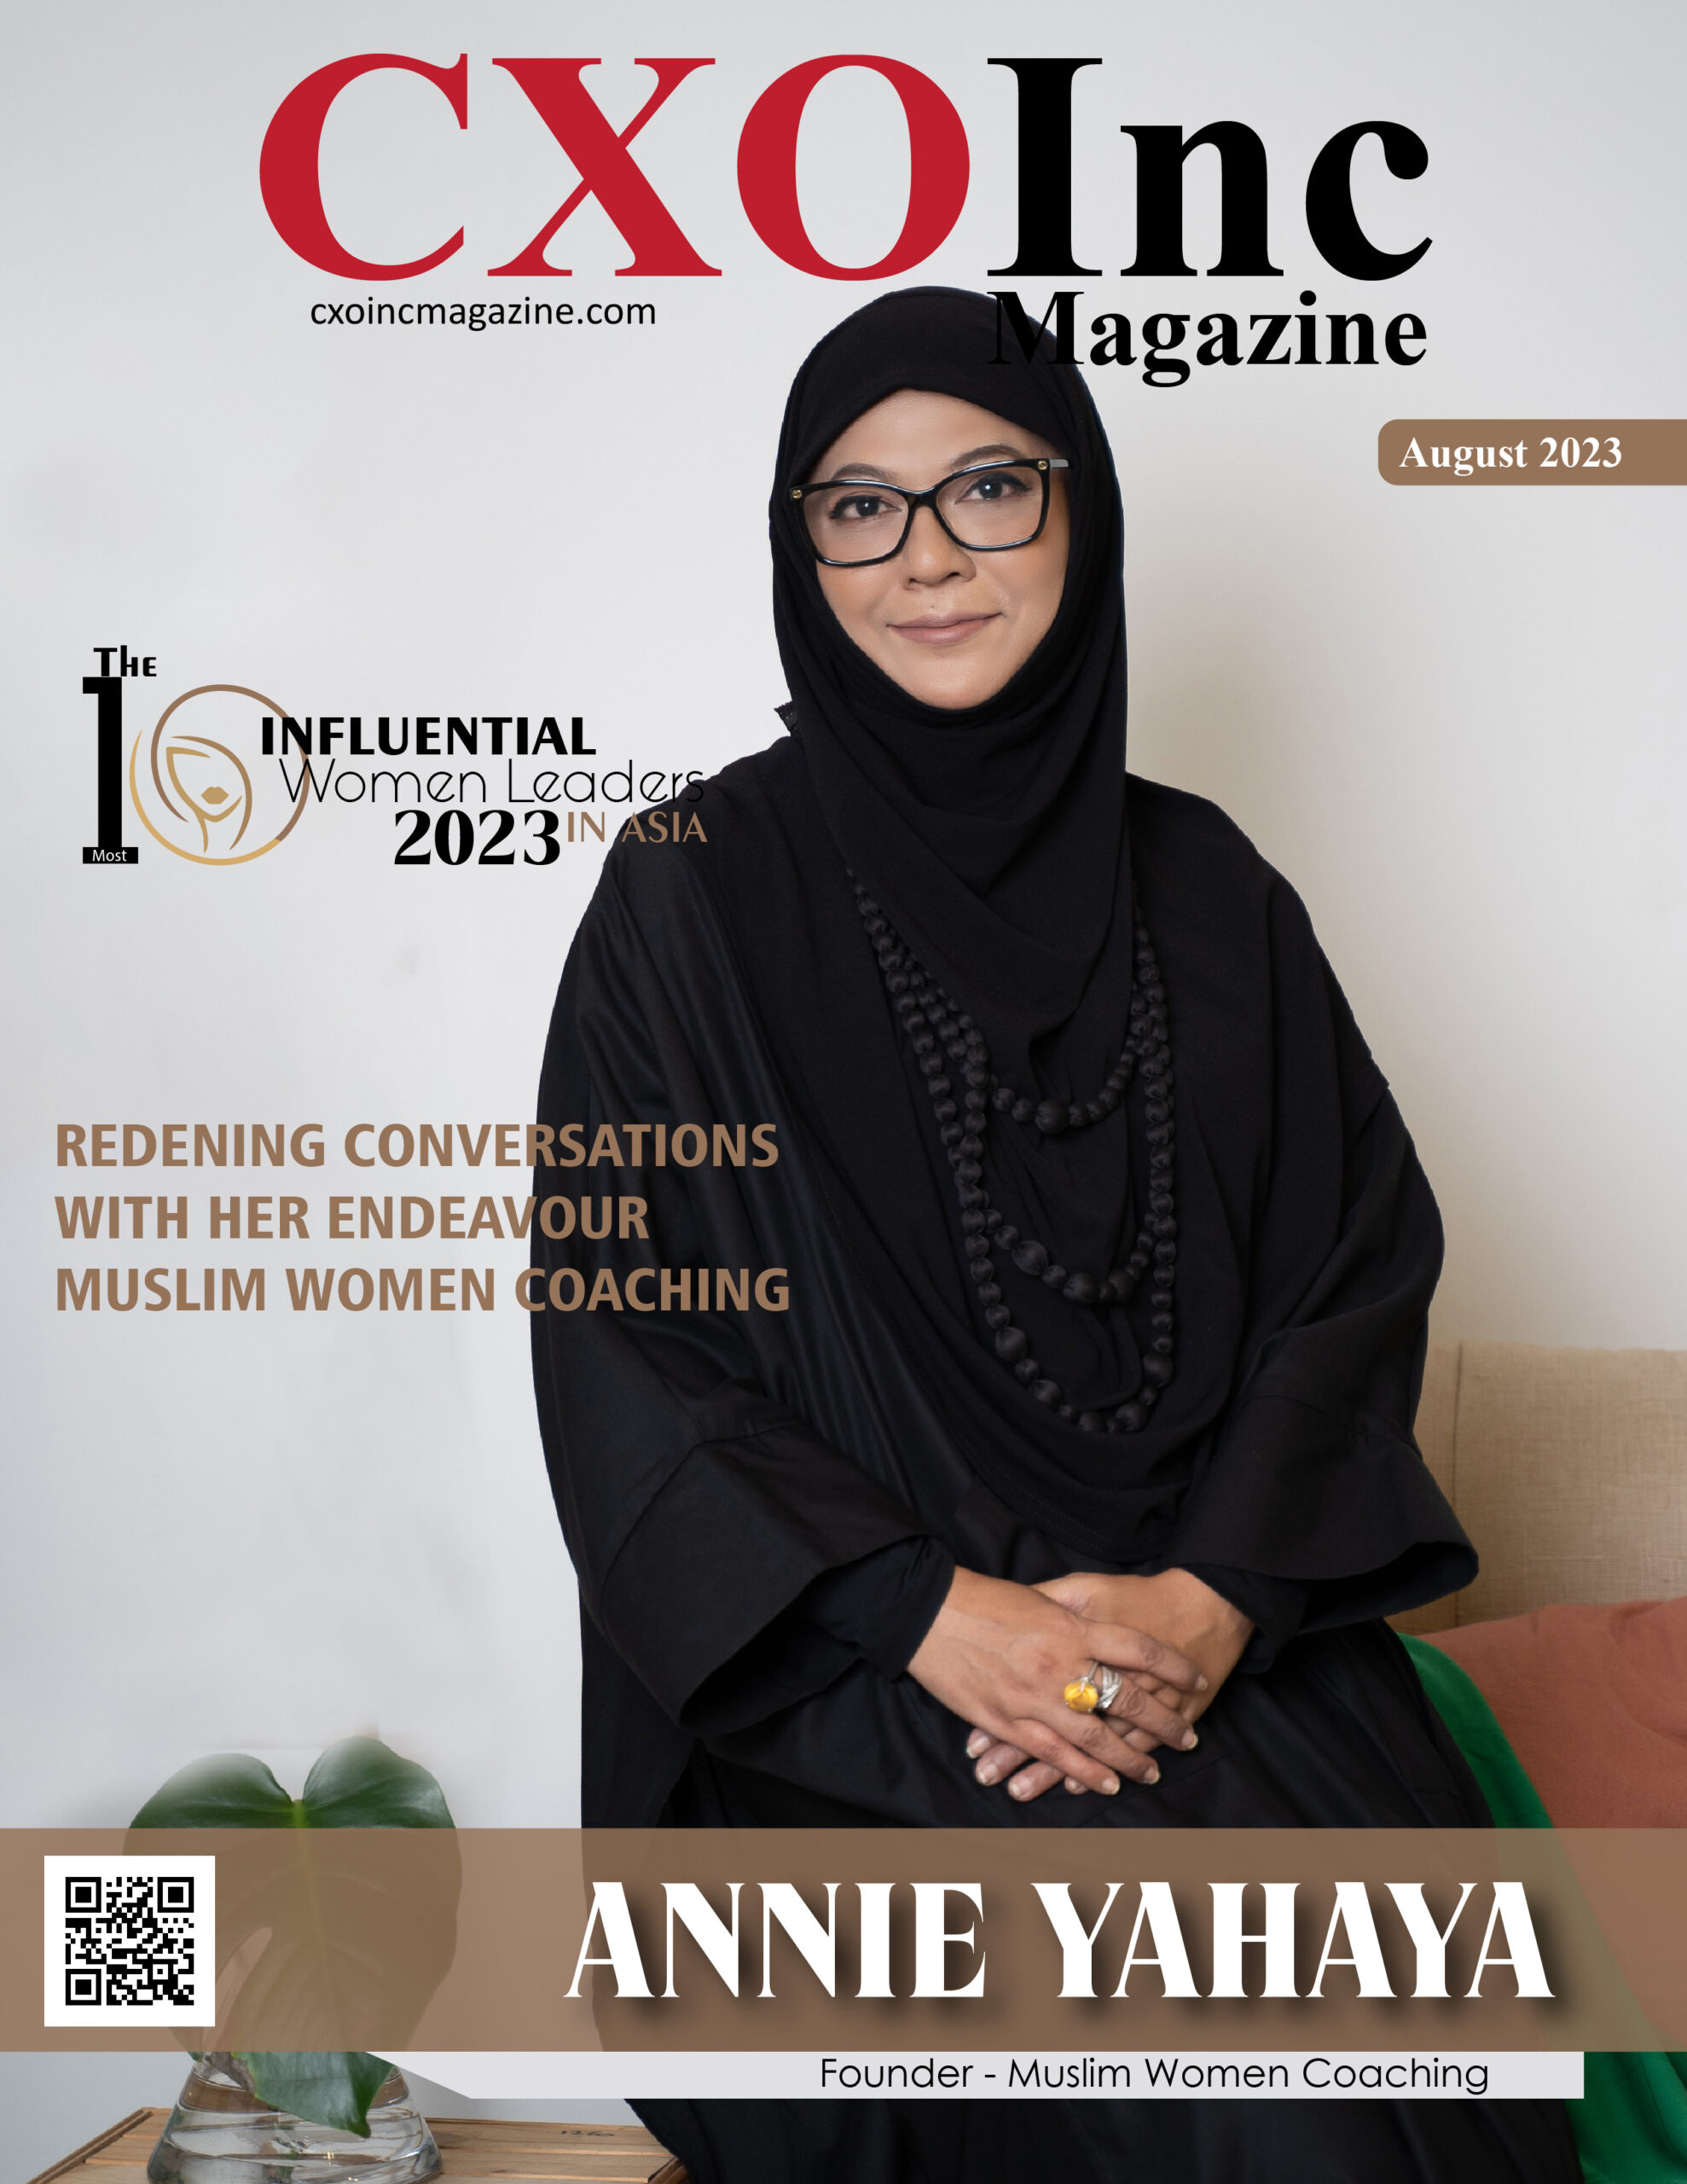 Annie Yahaya | founder | Muslim Women Coaching